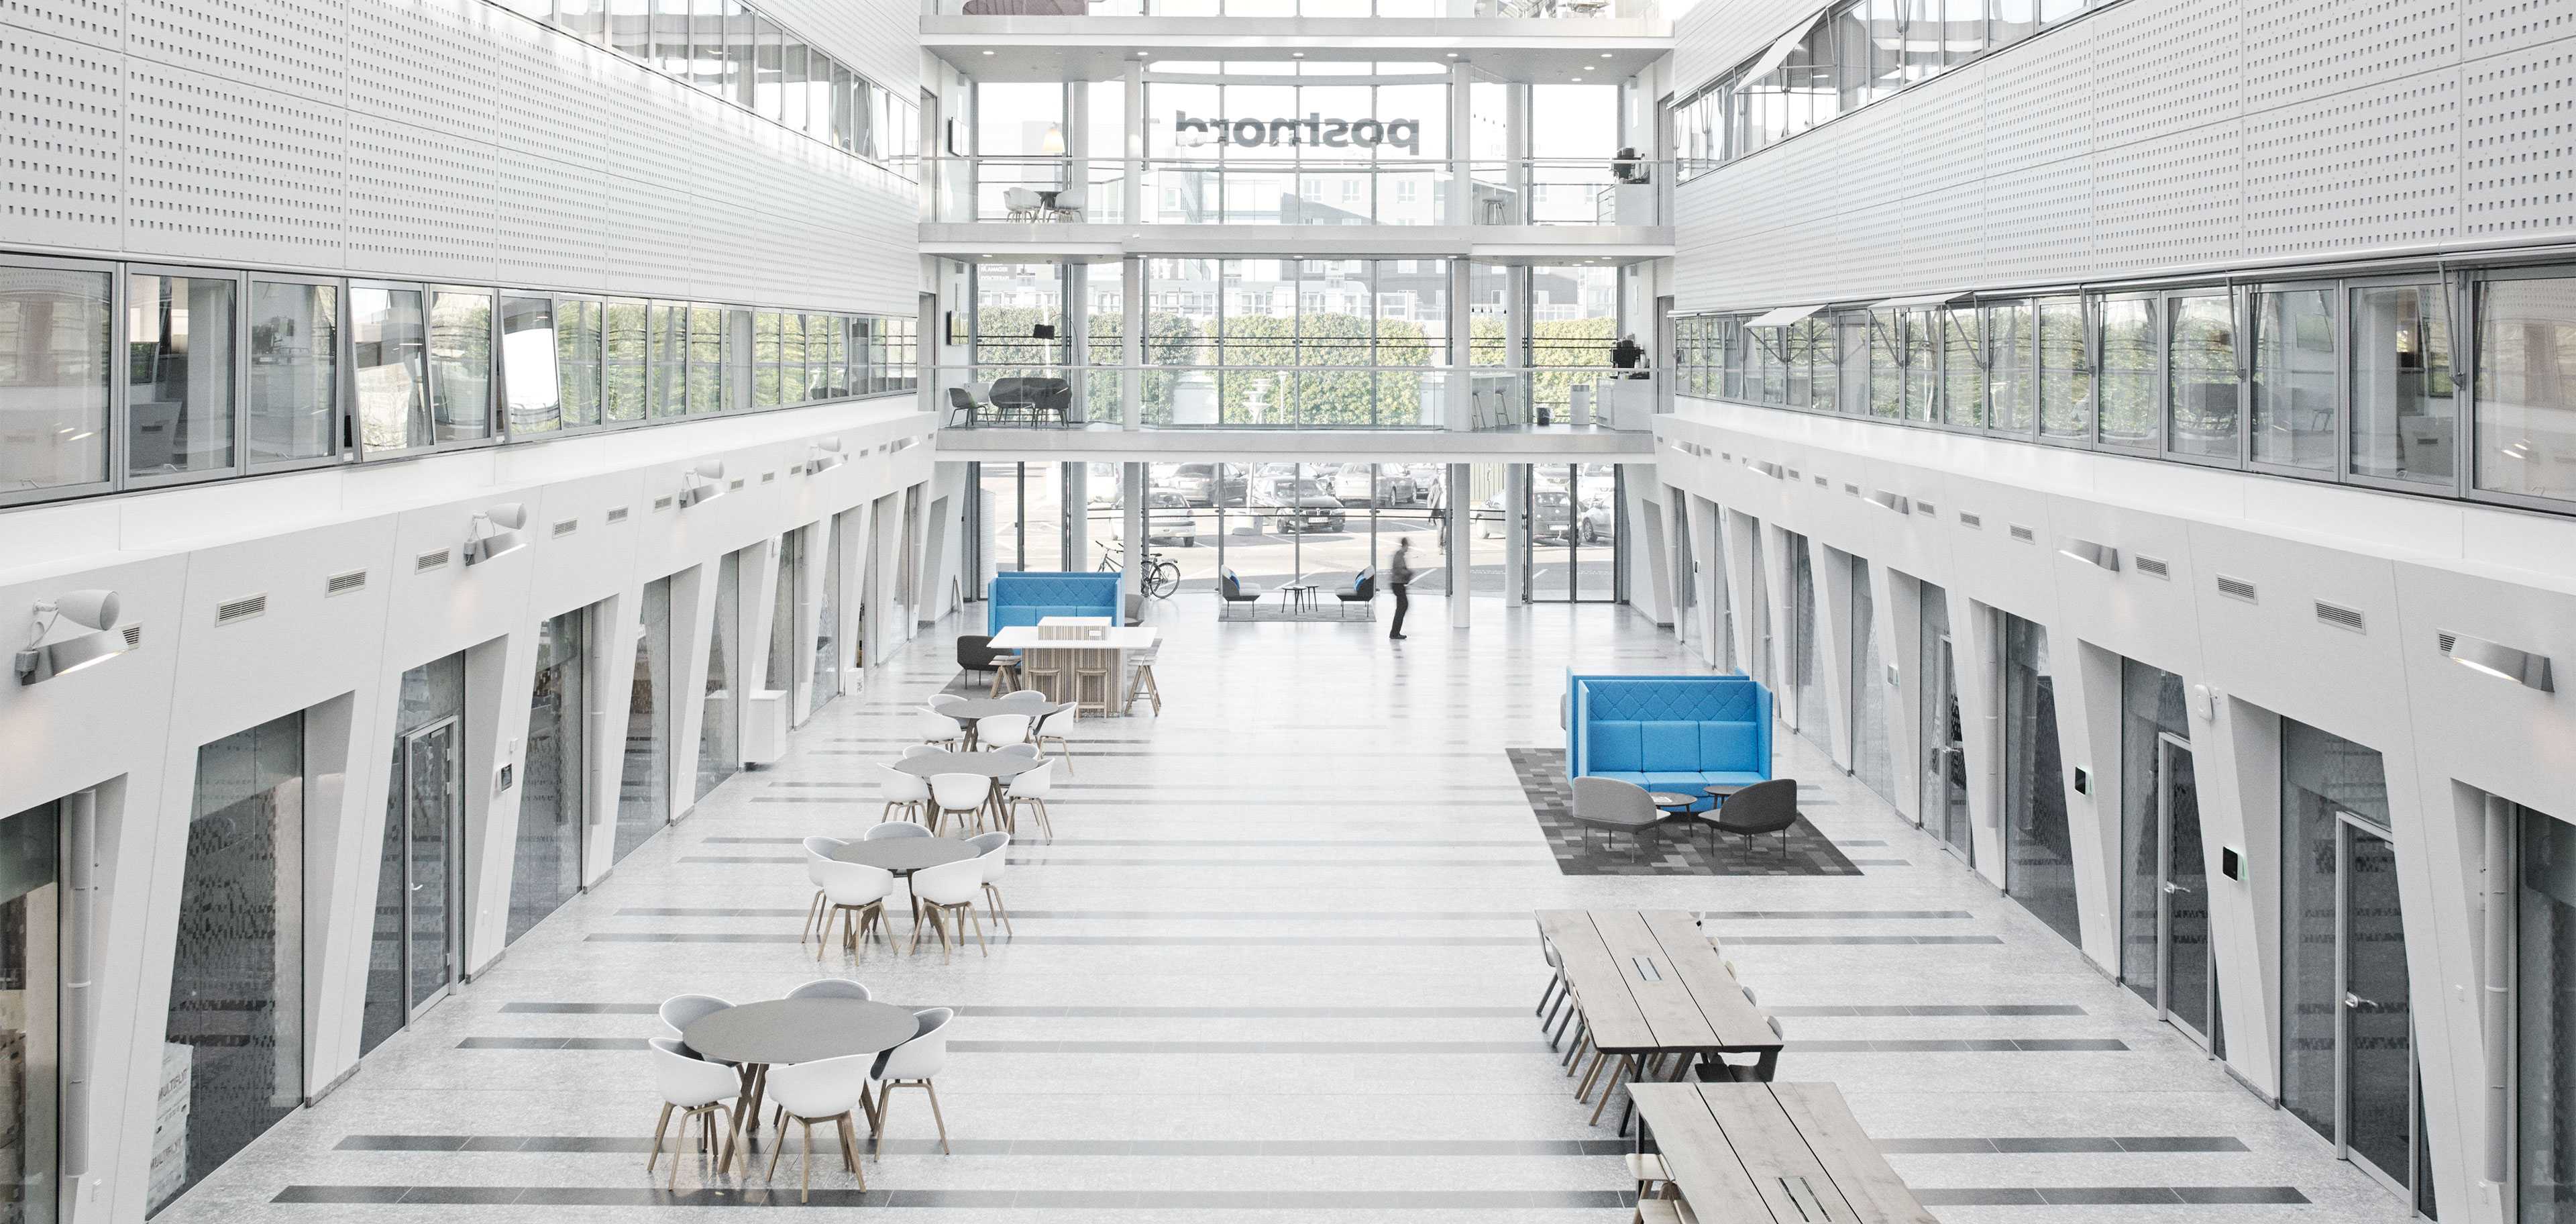 Postnord's head office in Copenhagen